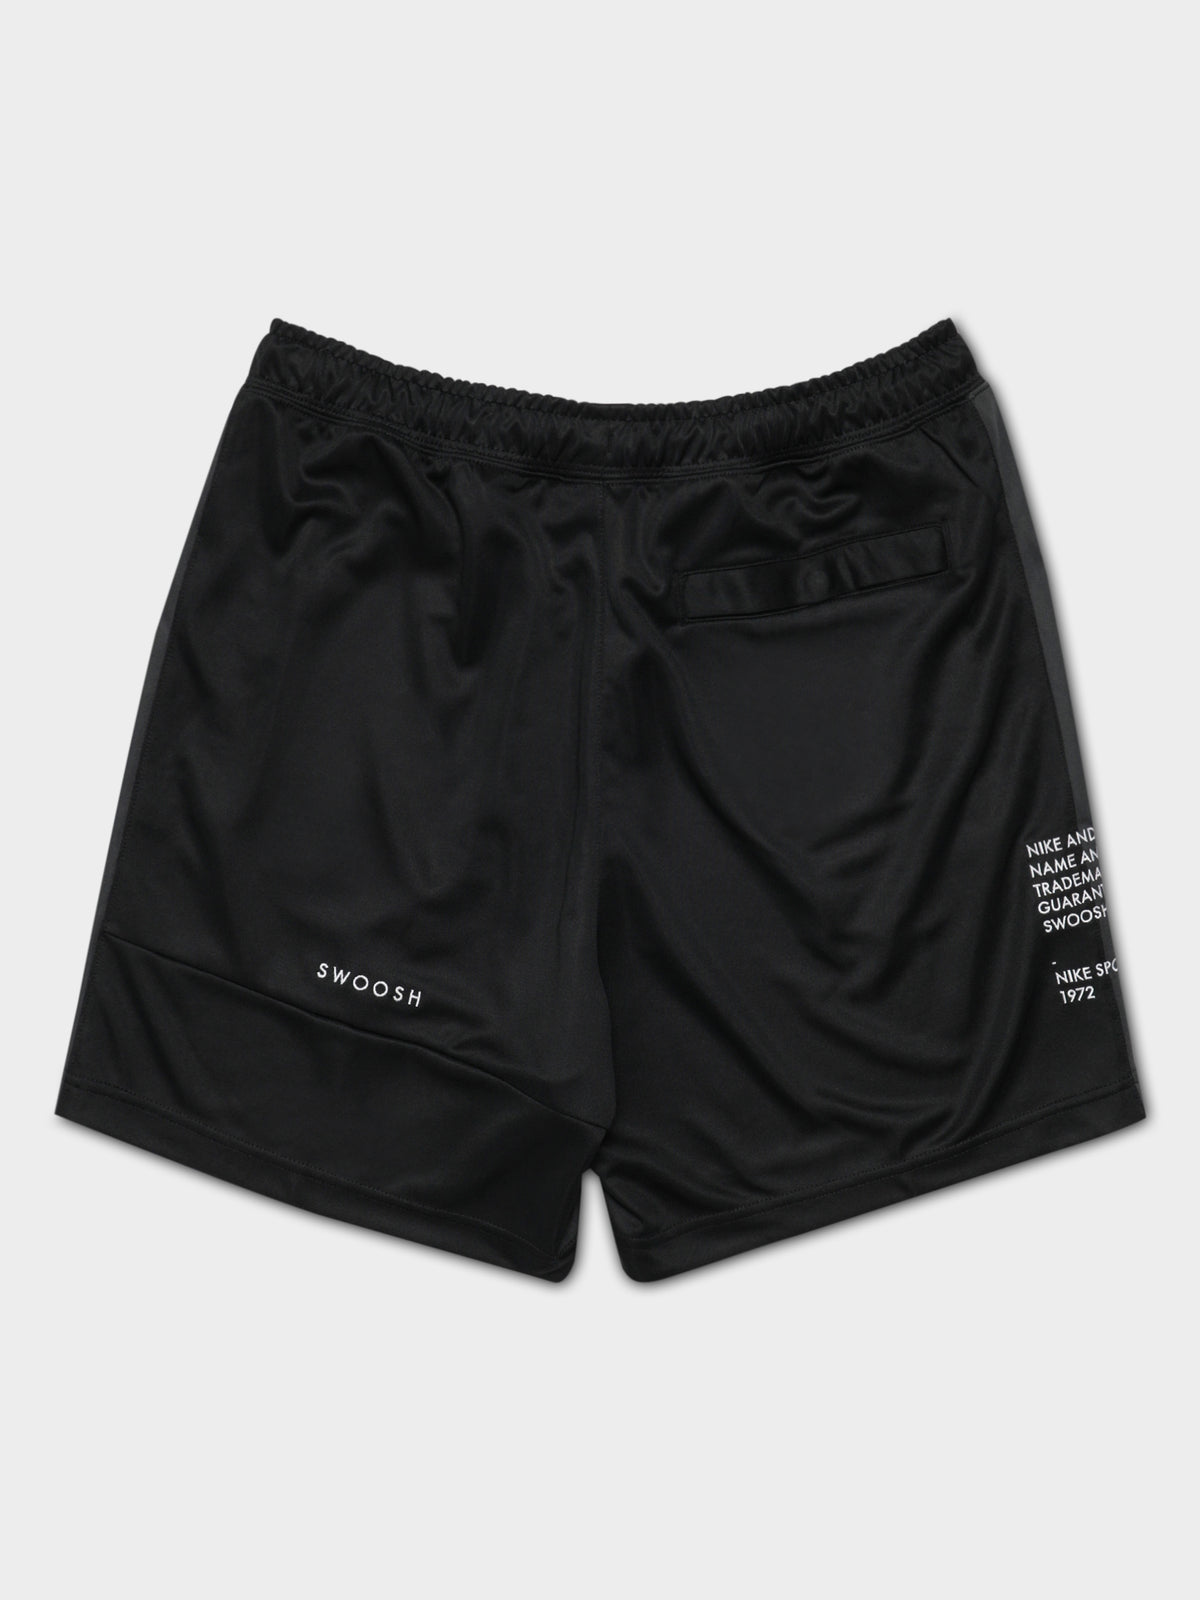 NSW Swoosh Shorts in Black